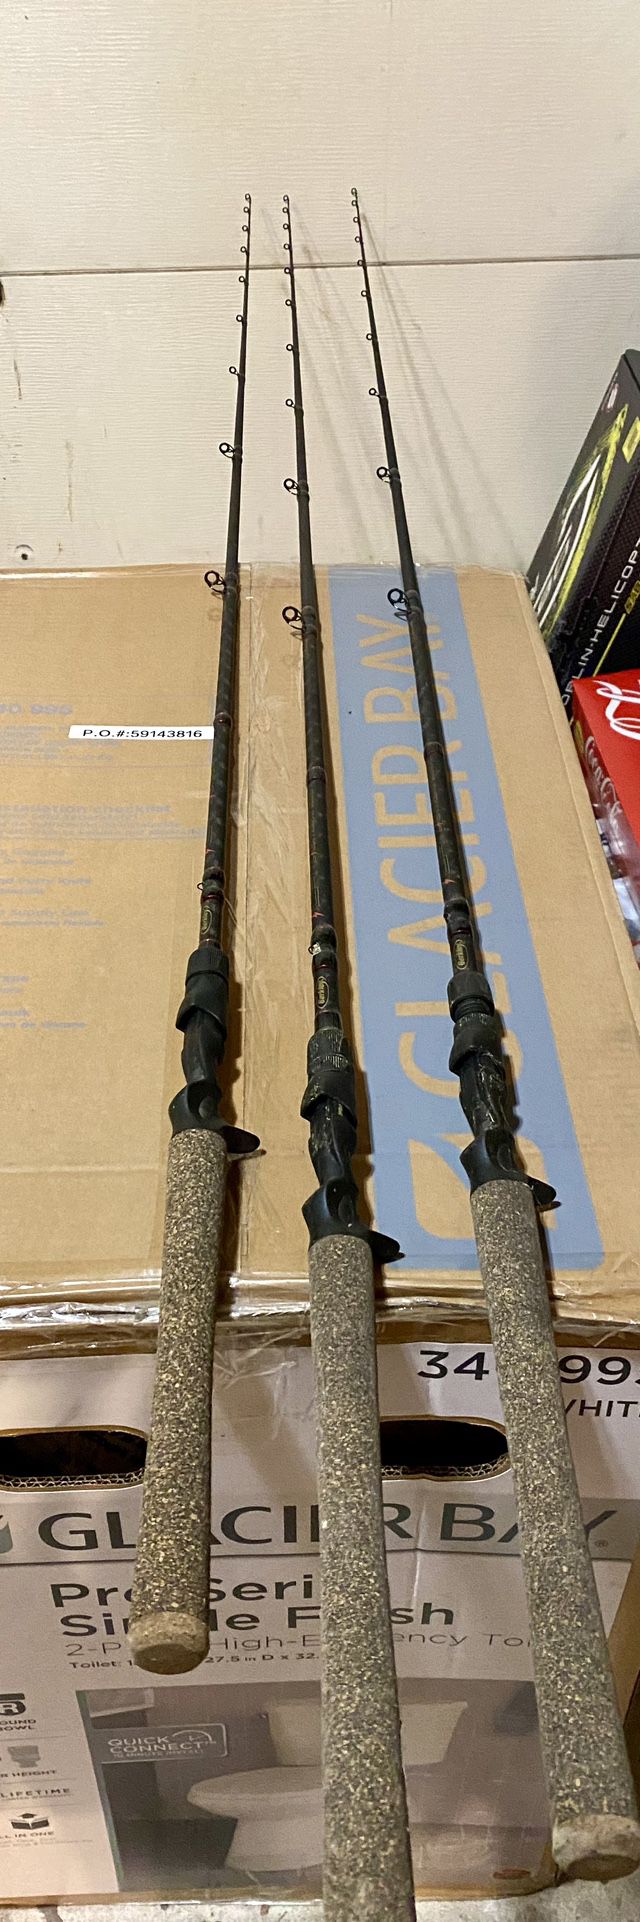 Berkeley Lightning Rods - Buy One Get Two Free